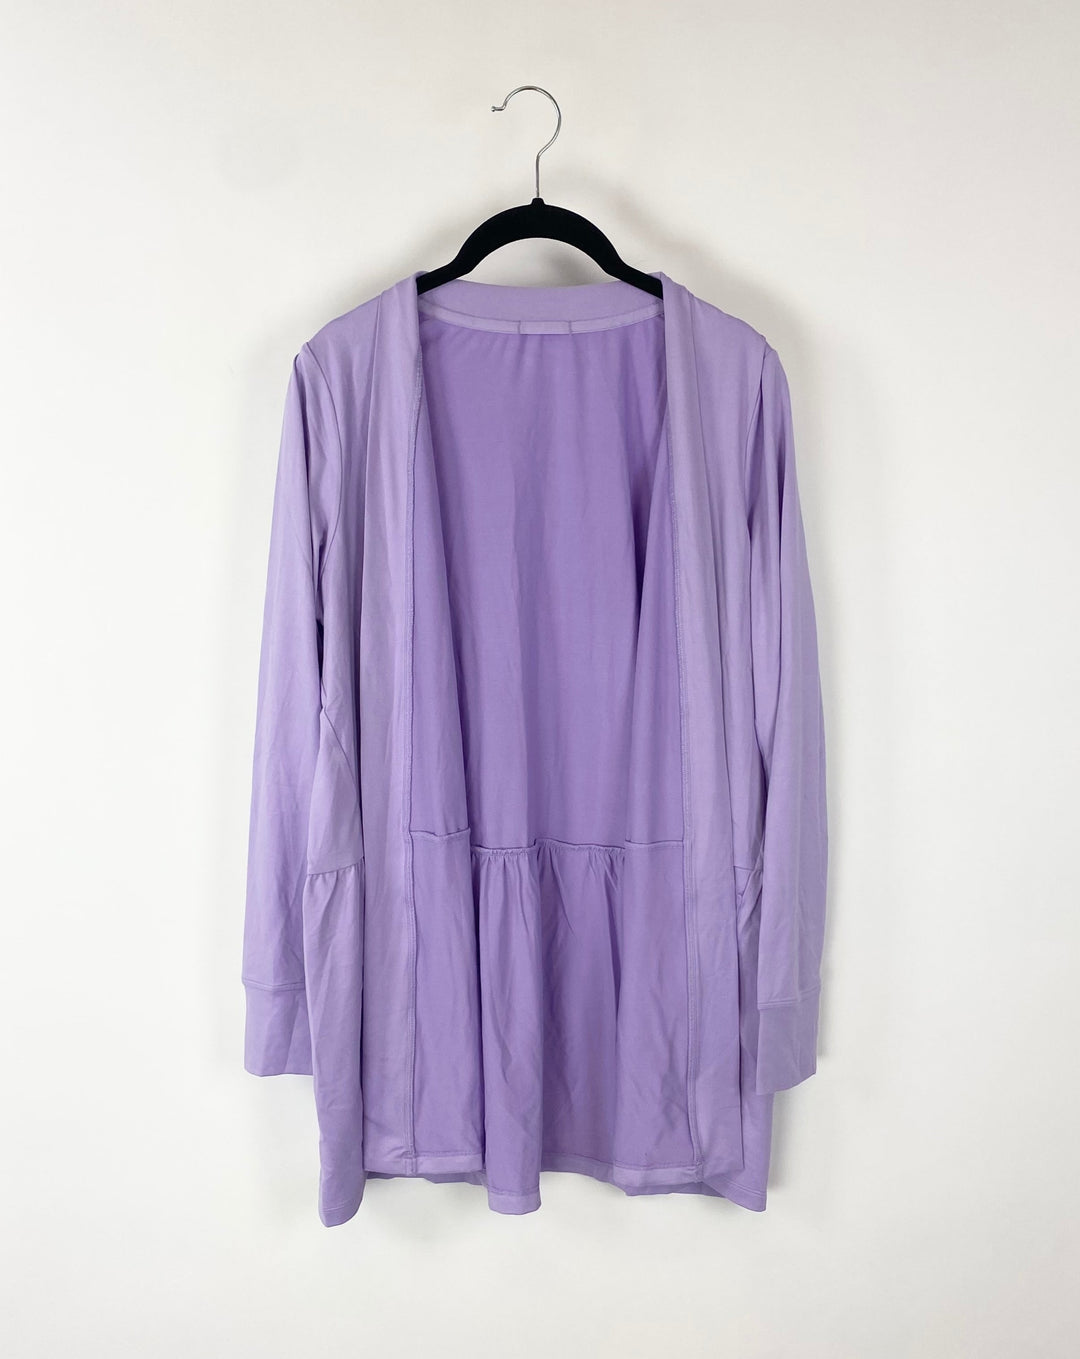 Purple Long Sleeve Cardigan - Size 6/8